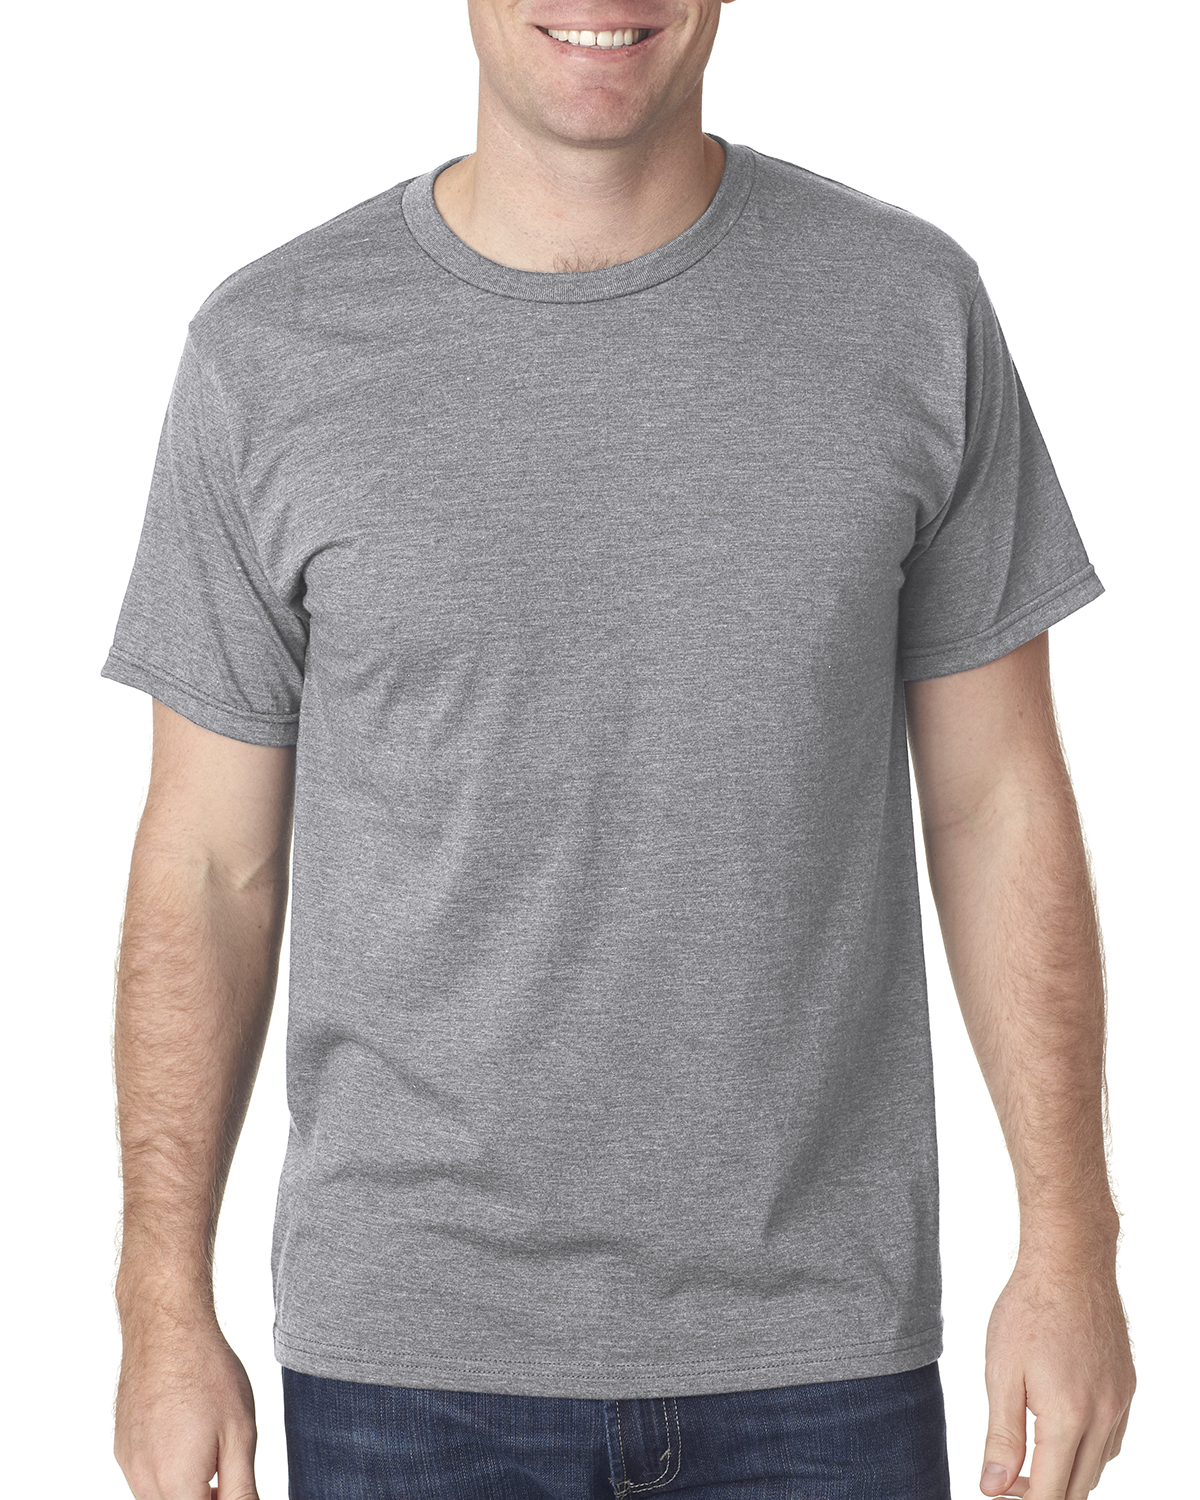 Bayside 5010 - Adult Heather Jersey Tee $9.74 - T-Shirts